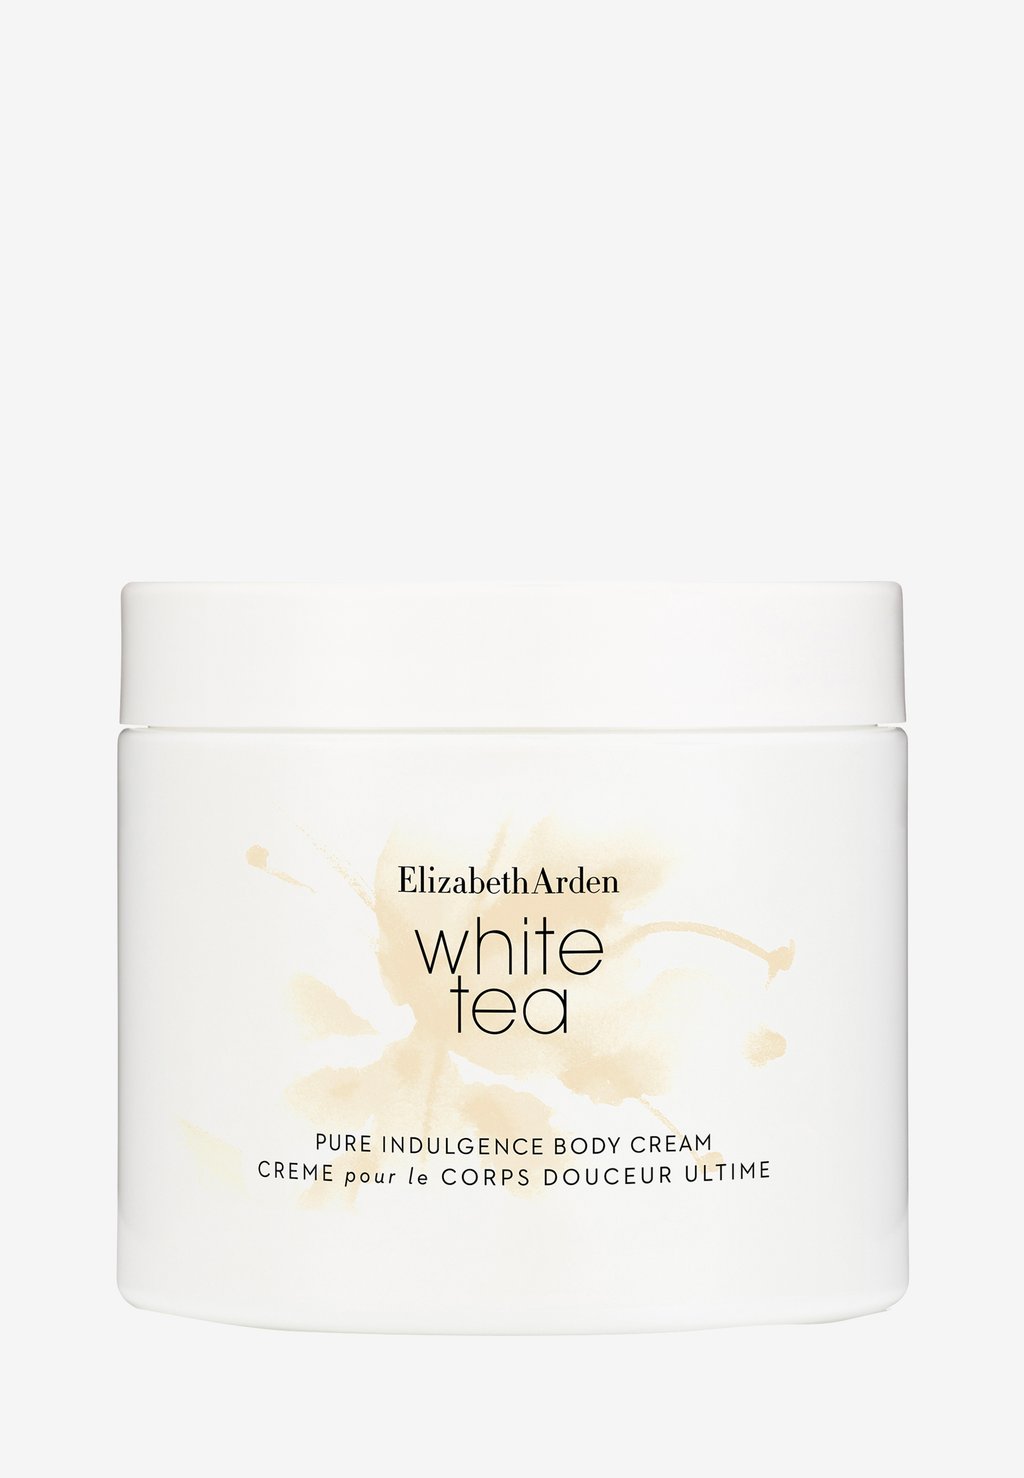 Увлажняющий крем WHITE TEA BODY CREAM Elizabeth Arden крем для тела green tea body cream honey drops elizabeth arden 500 ml